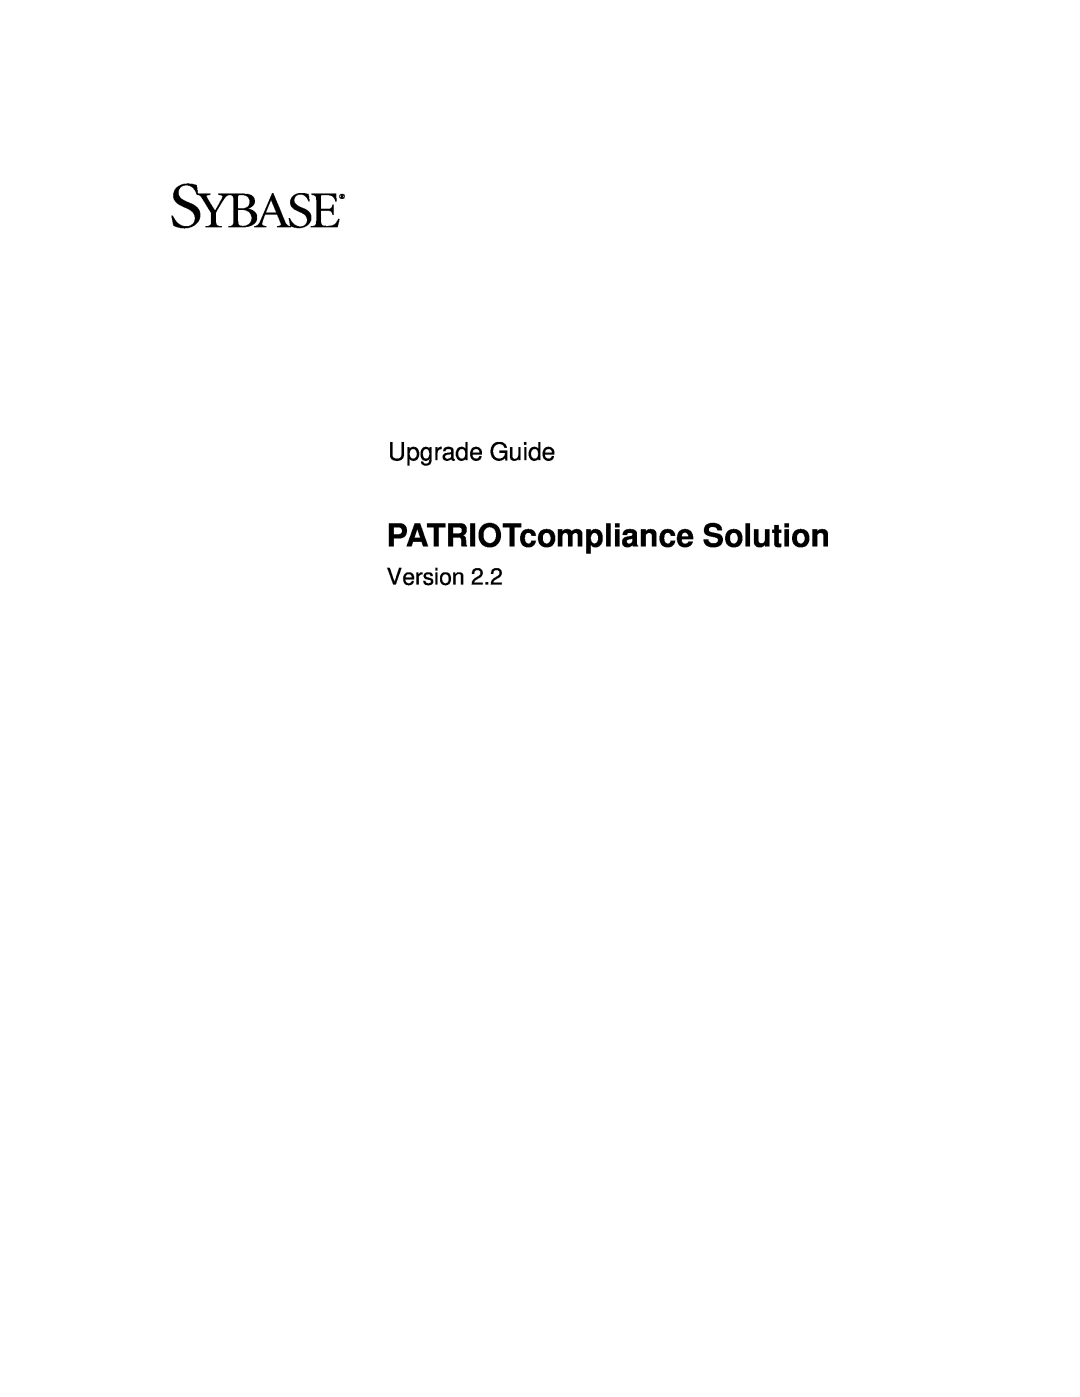 Sybase Version 2.2 manual PATRIOTcompliance Solution, Upgrade Guide 